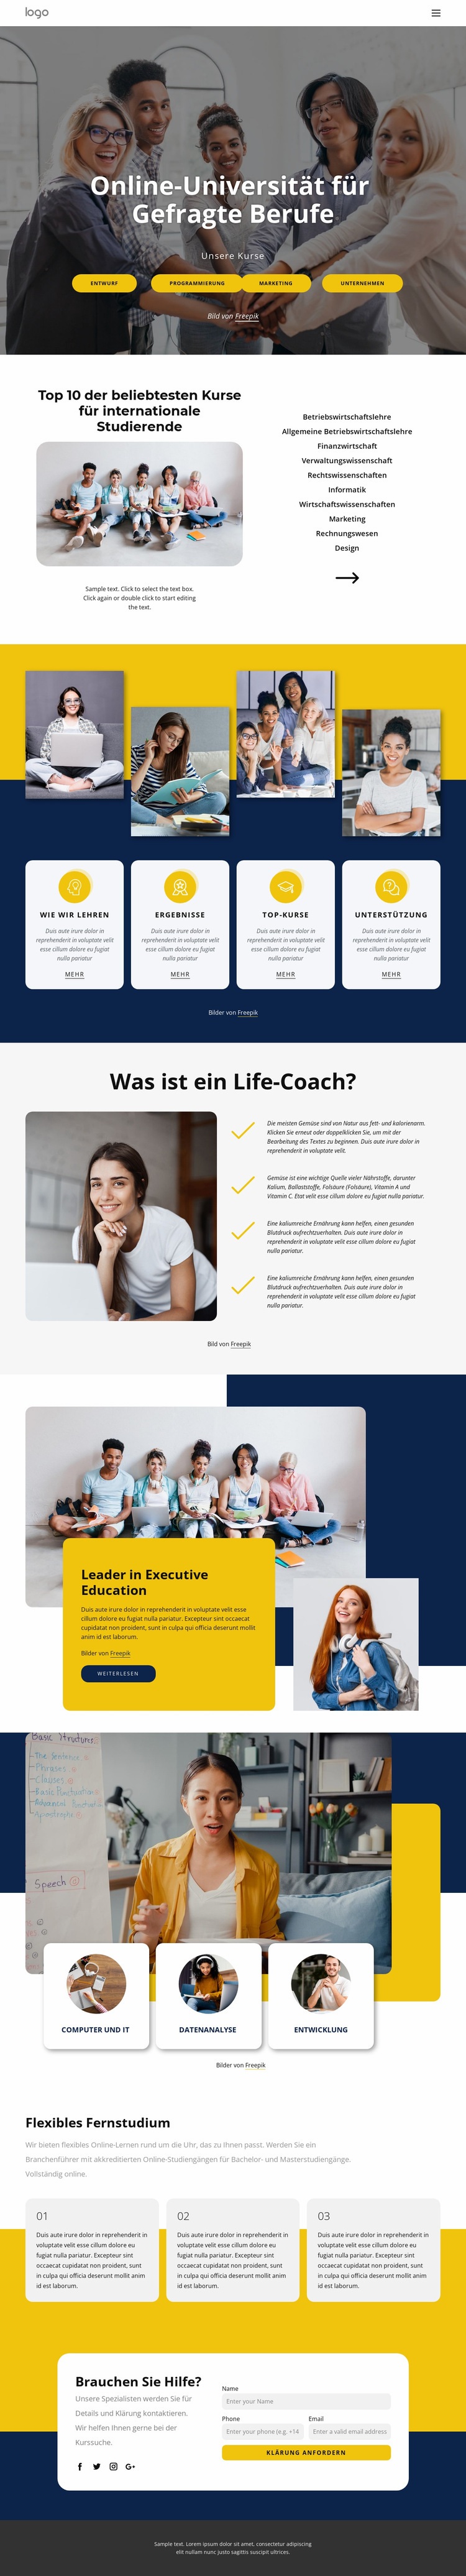 Online-Hochschulstudium Website design